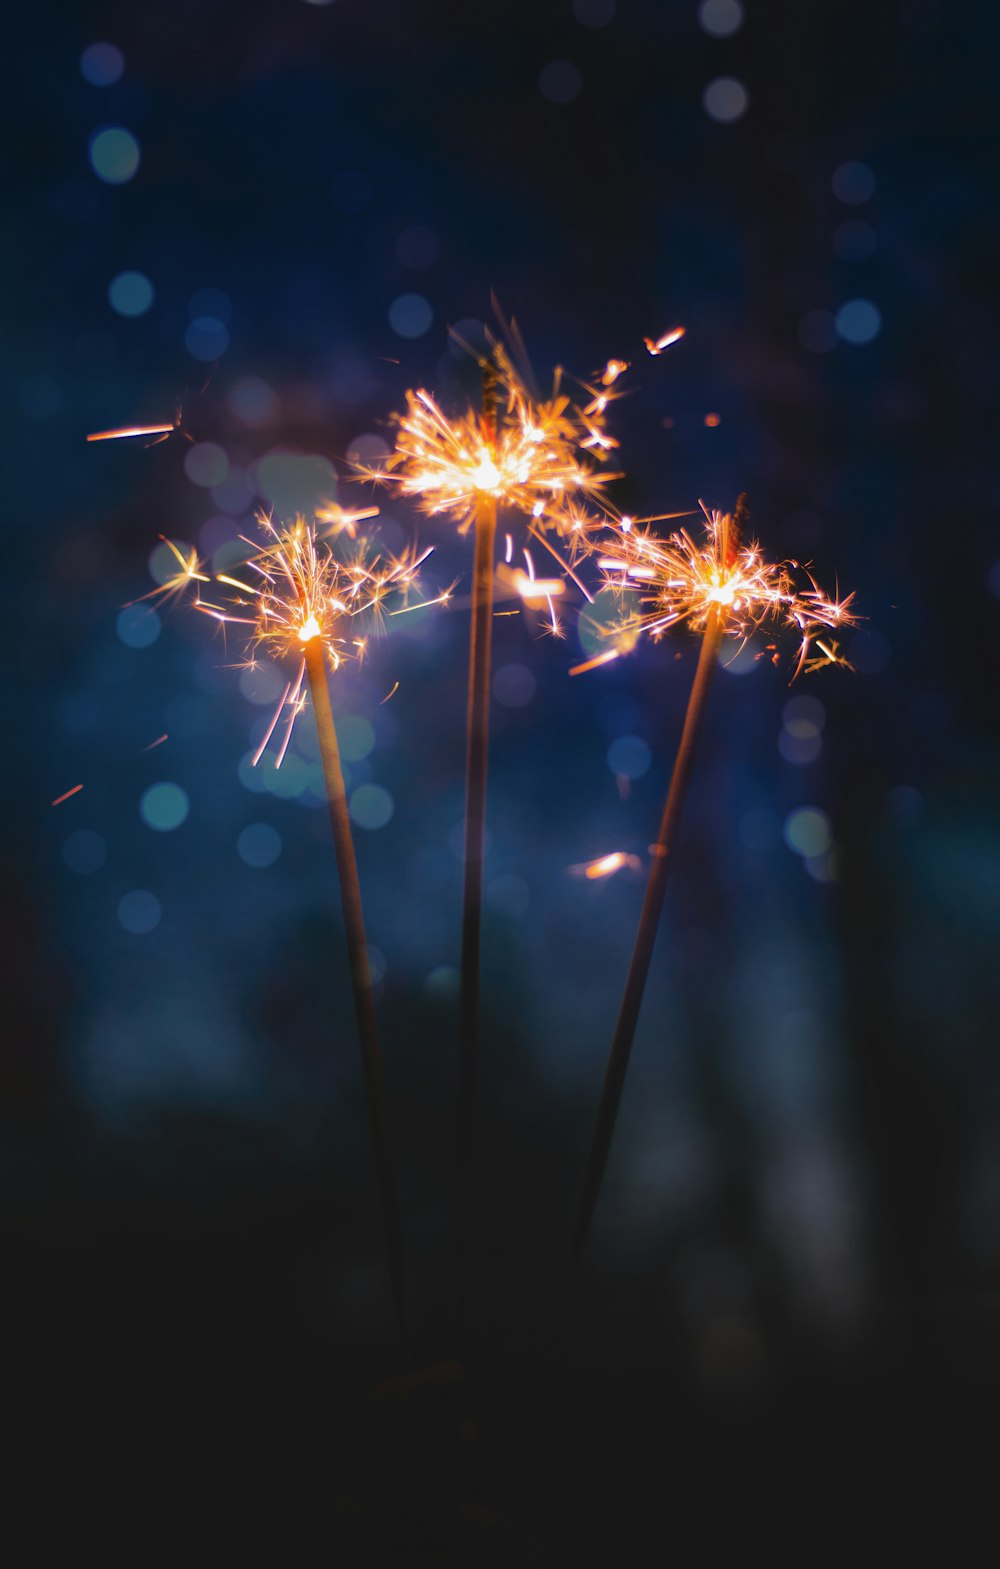 three sparkler sticks photo – Free Birthday Image on Unsplash